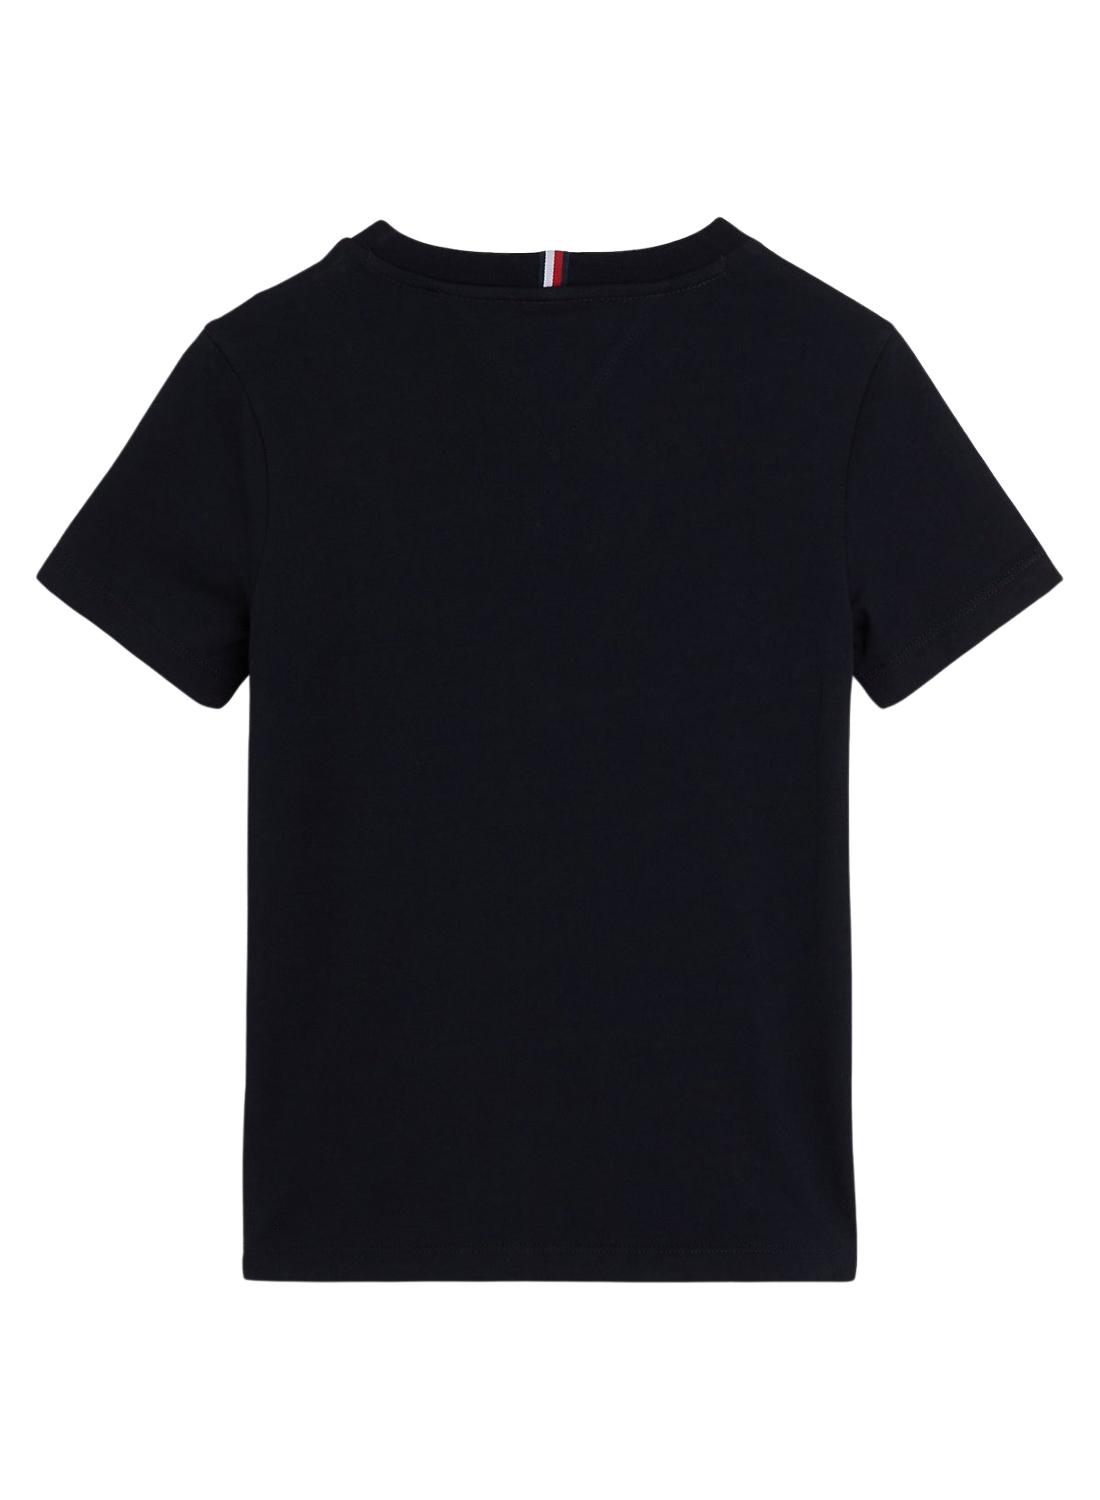 T-Shirt Tommy Hifiger Logo Blu Navy per Bambino